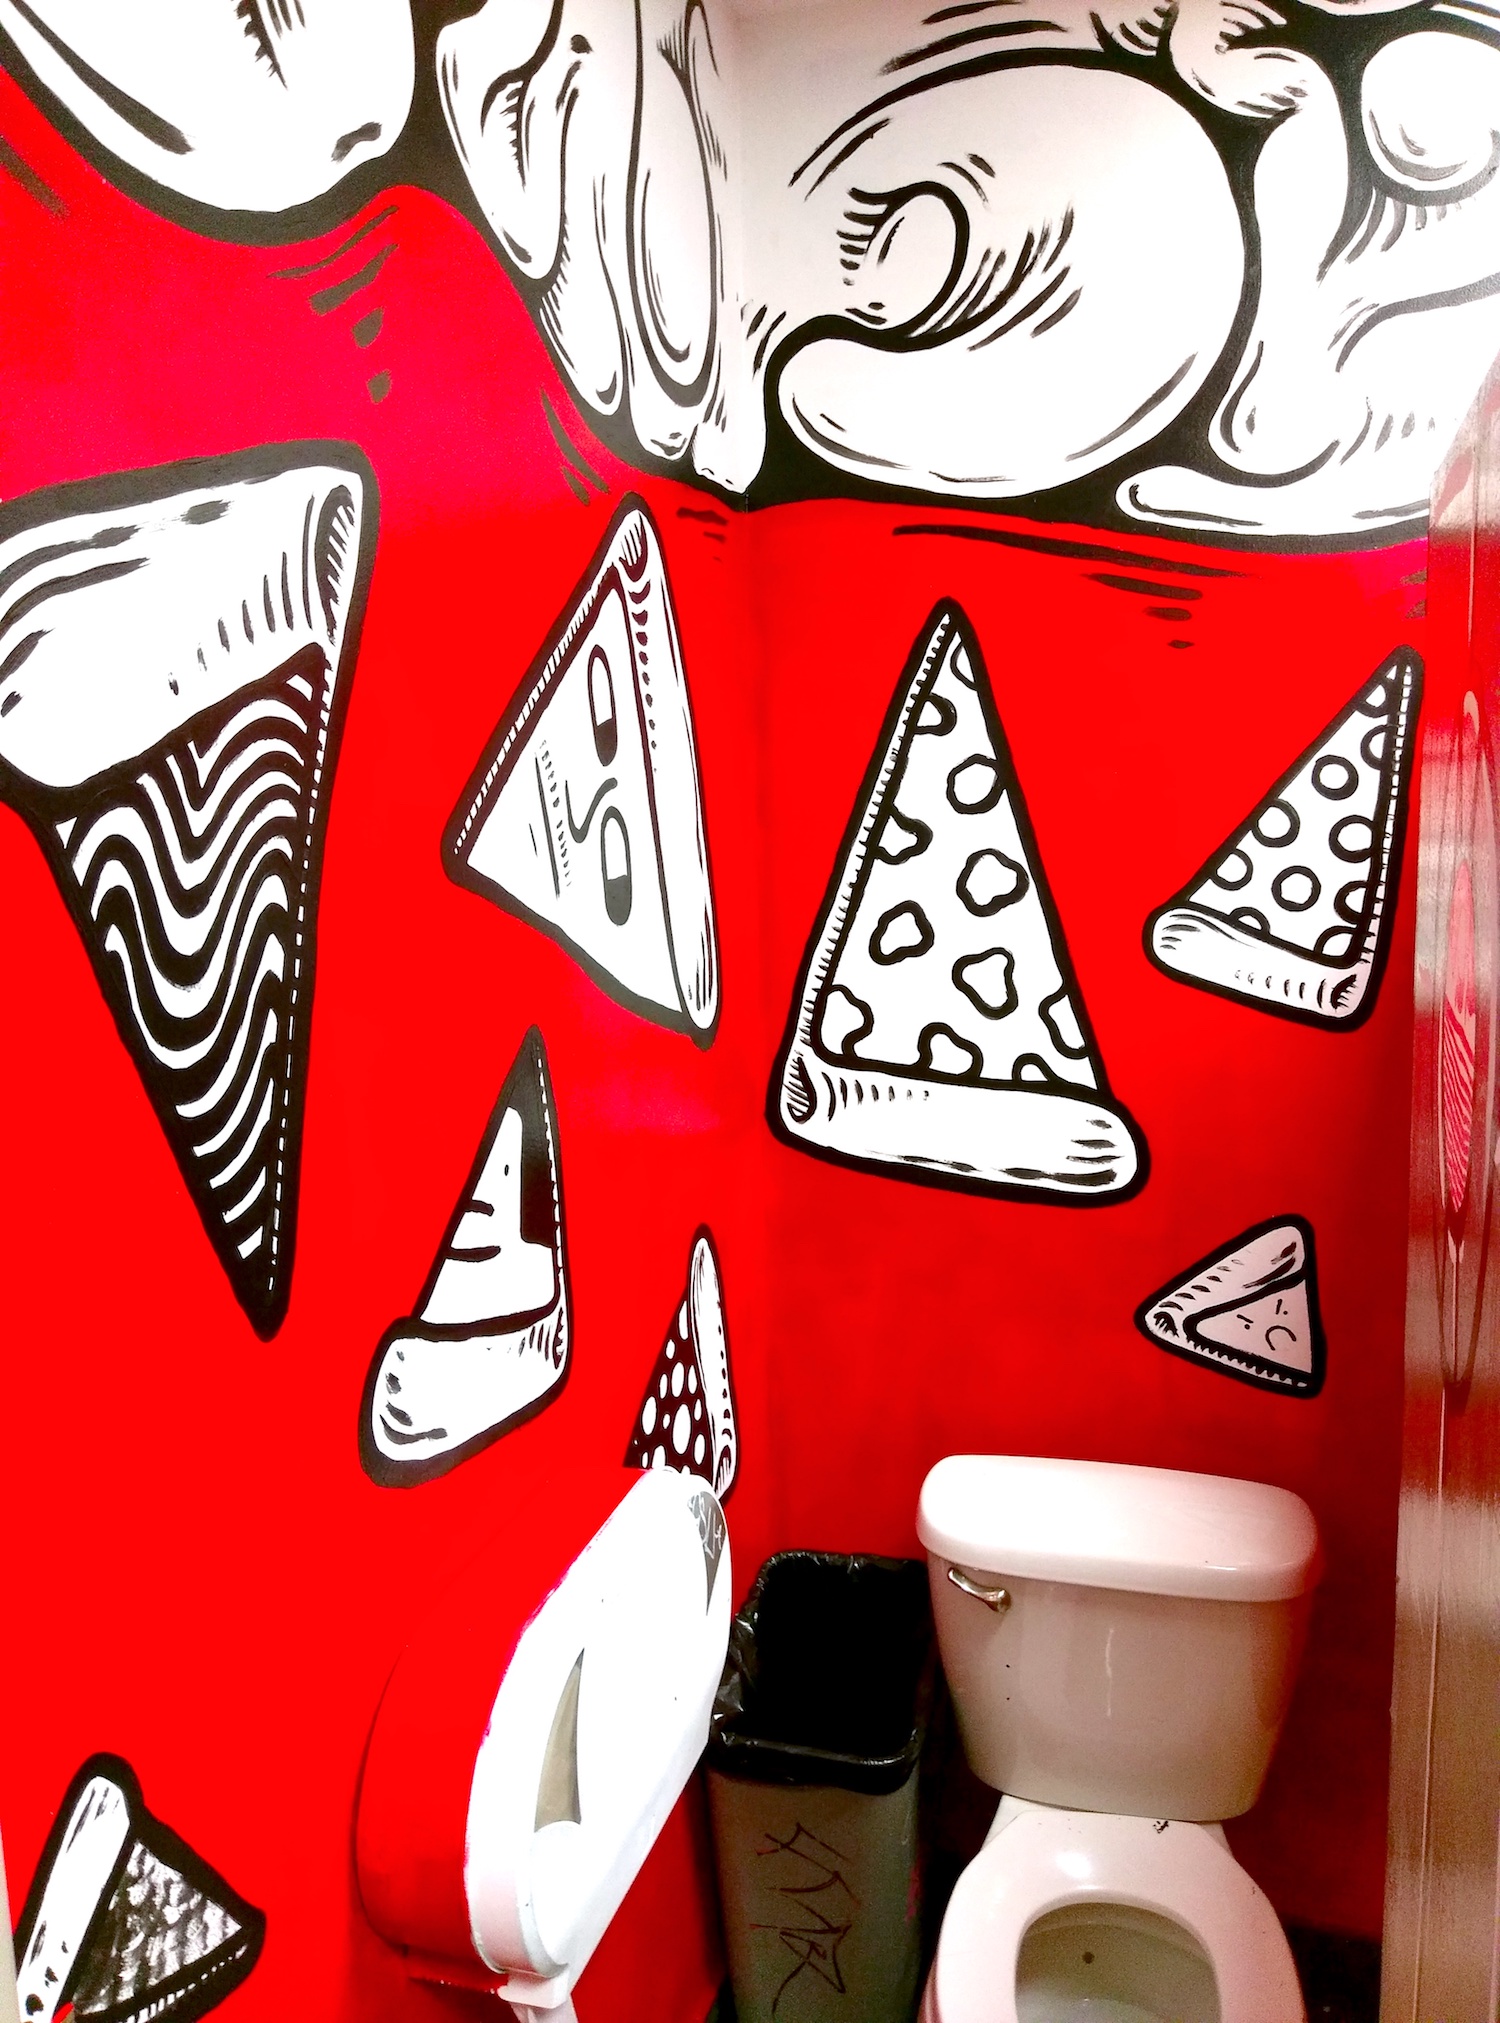 Dimo's Pizza Women's Restroom